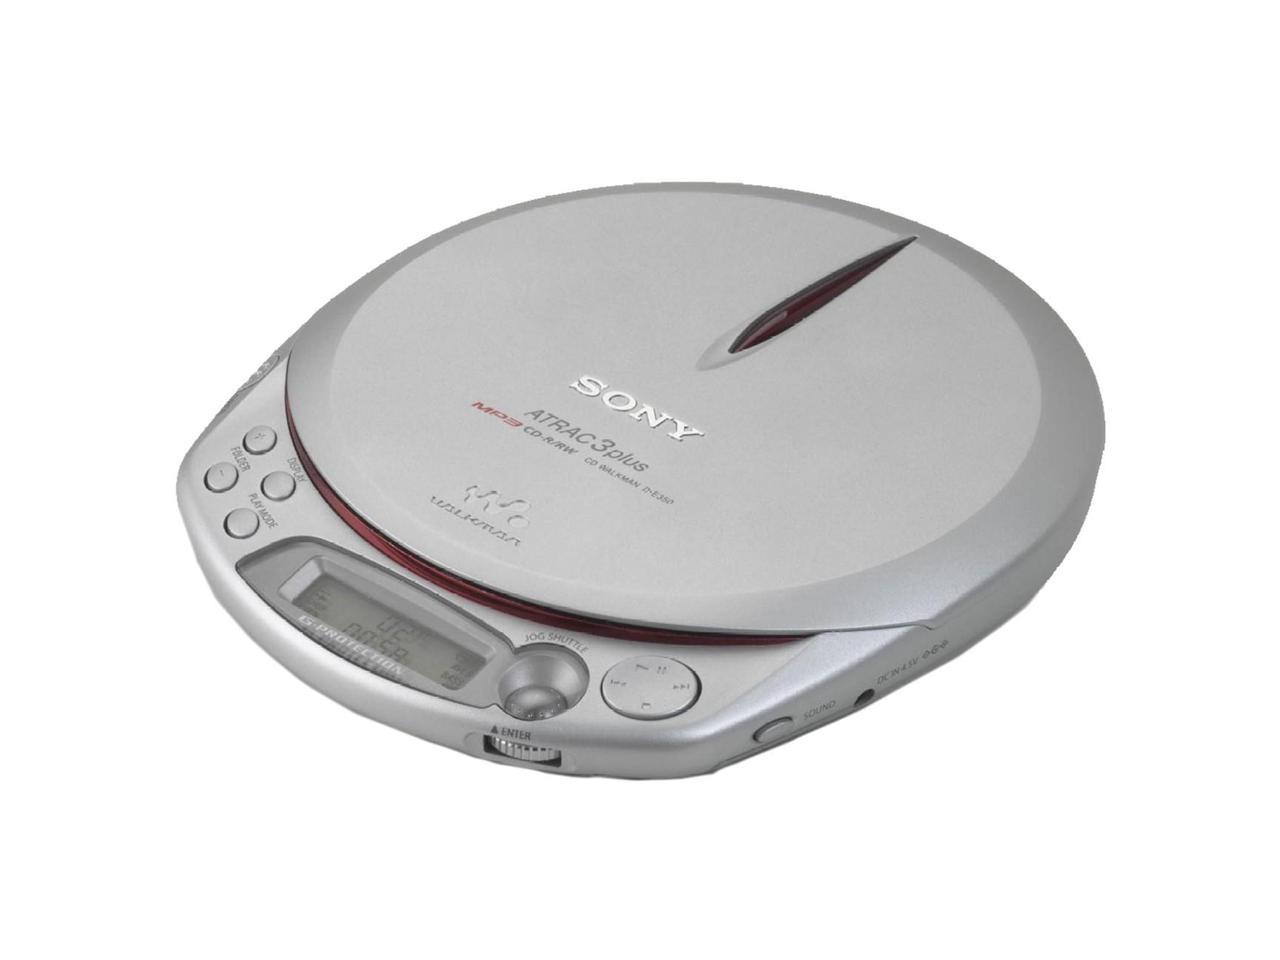 Sony Walkman D-NE510 CD MP3 Player - Newegg.com